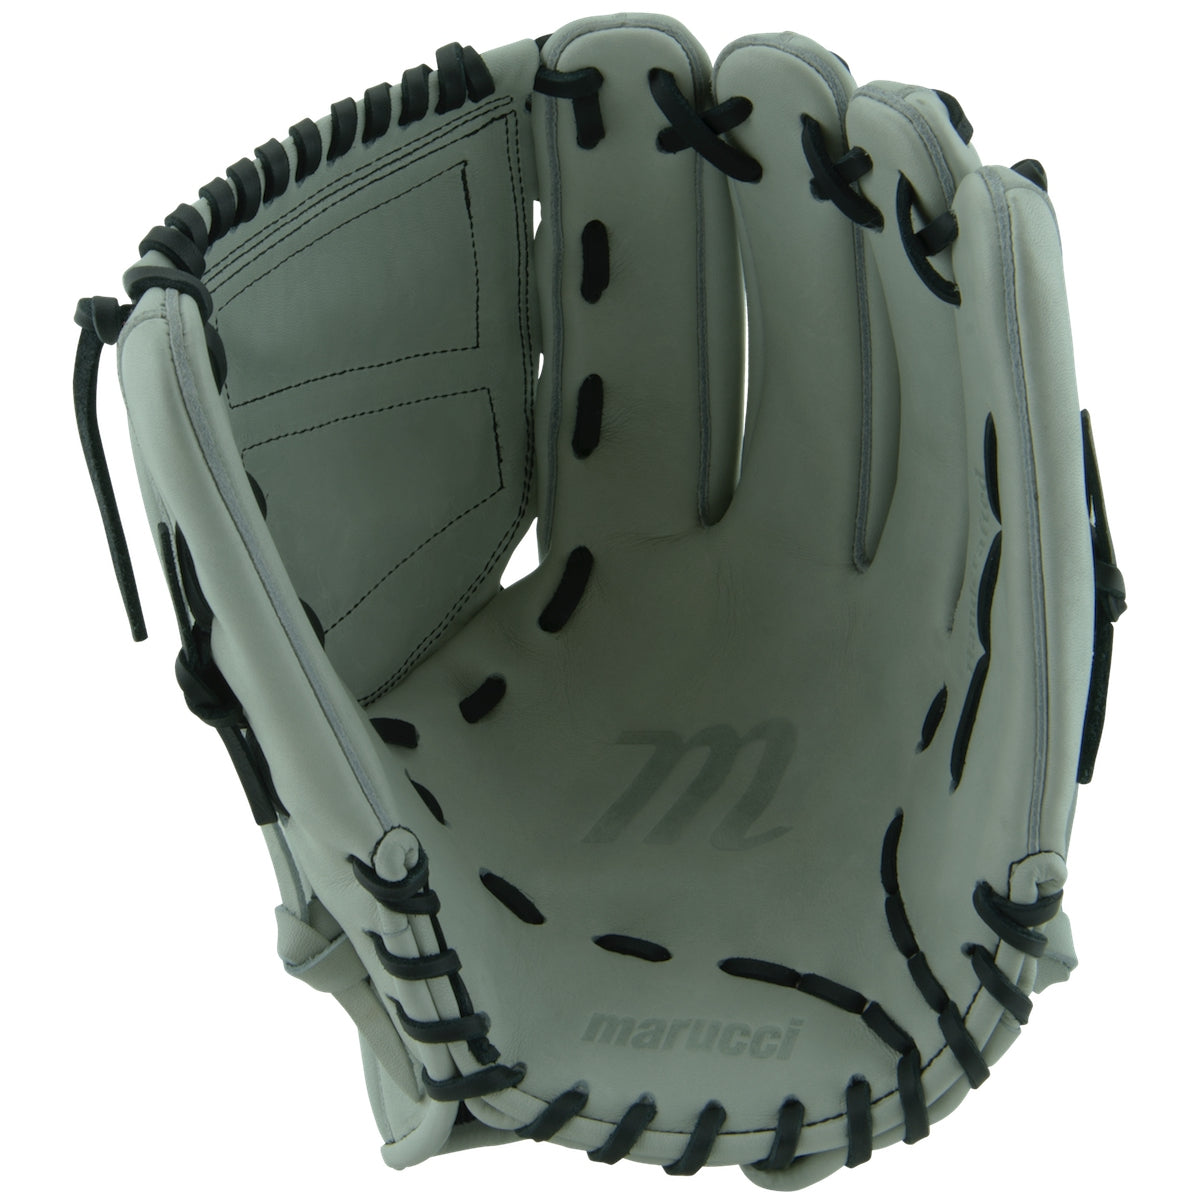 Marucci Fastpitch Series MFGSB1250SV 12.5 inch Softball Glove